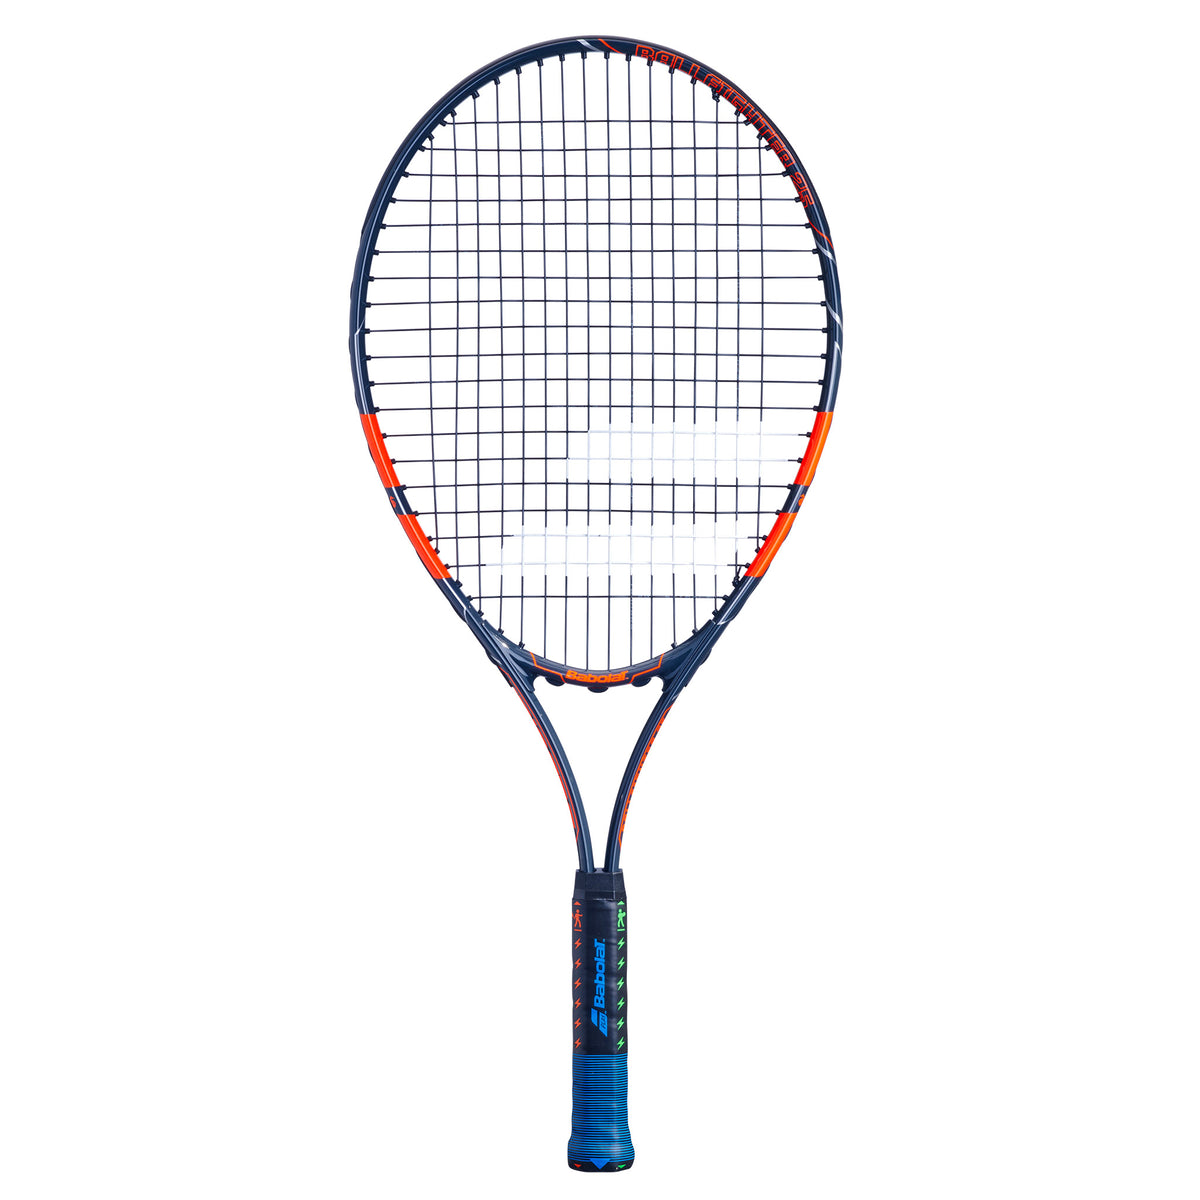 Babolat Ballfighter 25 Tennis Racket